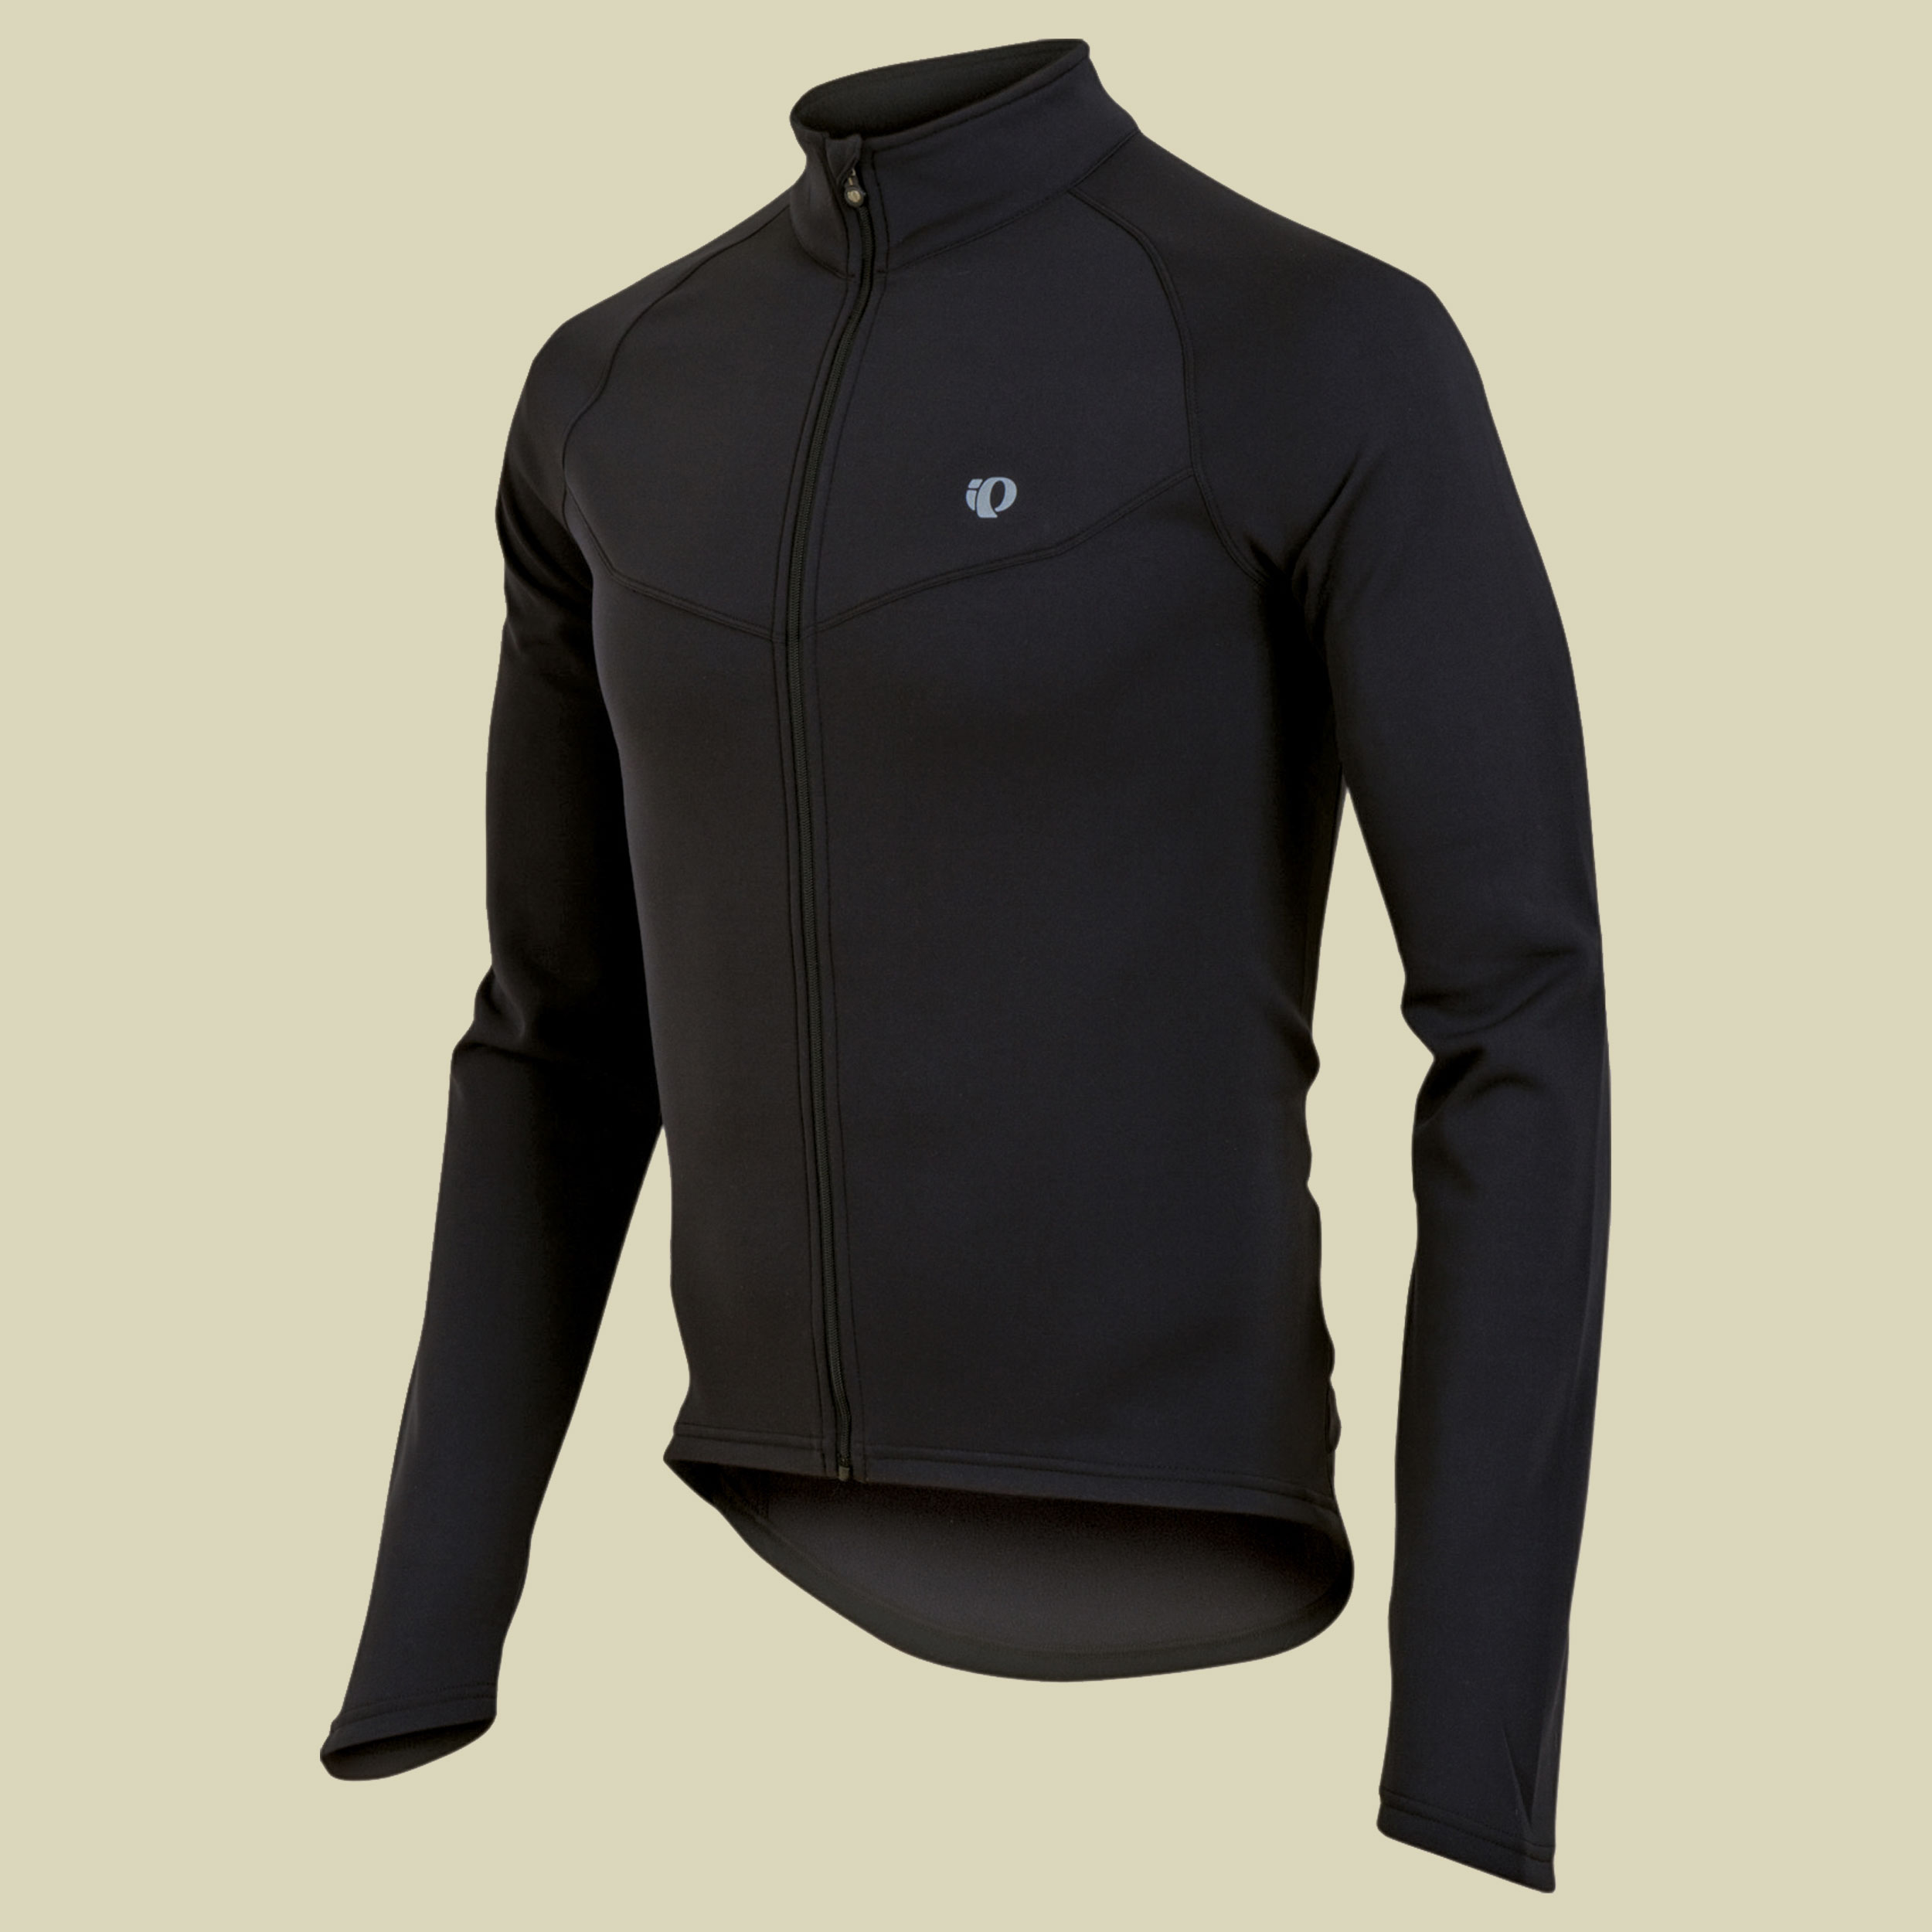 Select Thermal Jersey Größe M Farbe black